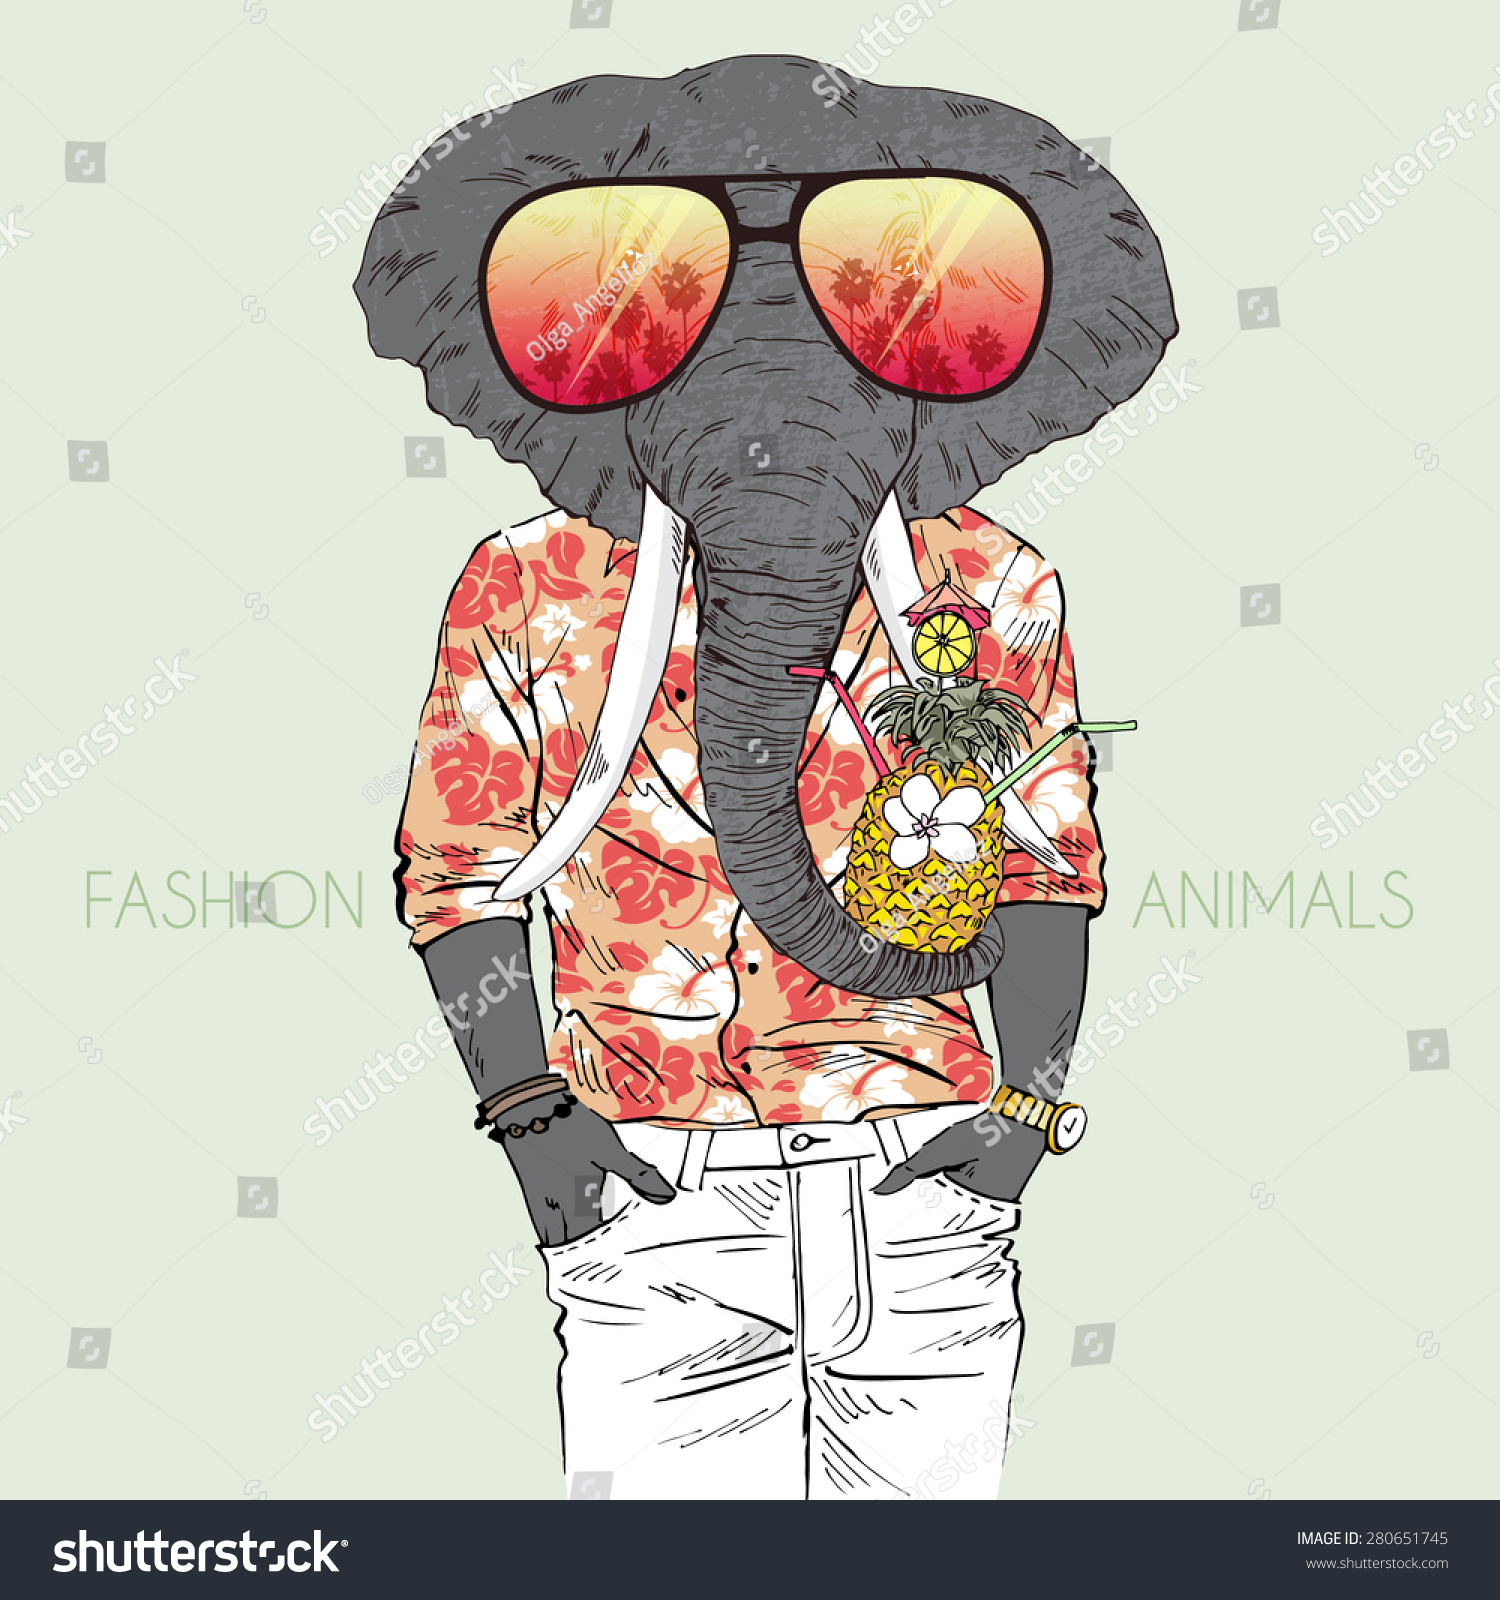 stock-vector-fashion-animal-illustration-elephant-dressed-up-in-aloha-shirt-summer-vacation-hawaiian-style-280651745.jpg